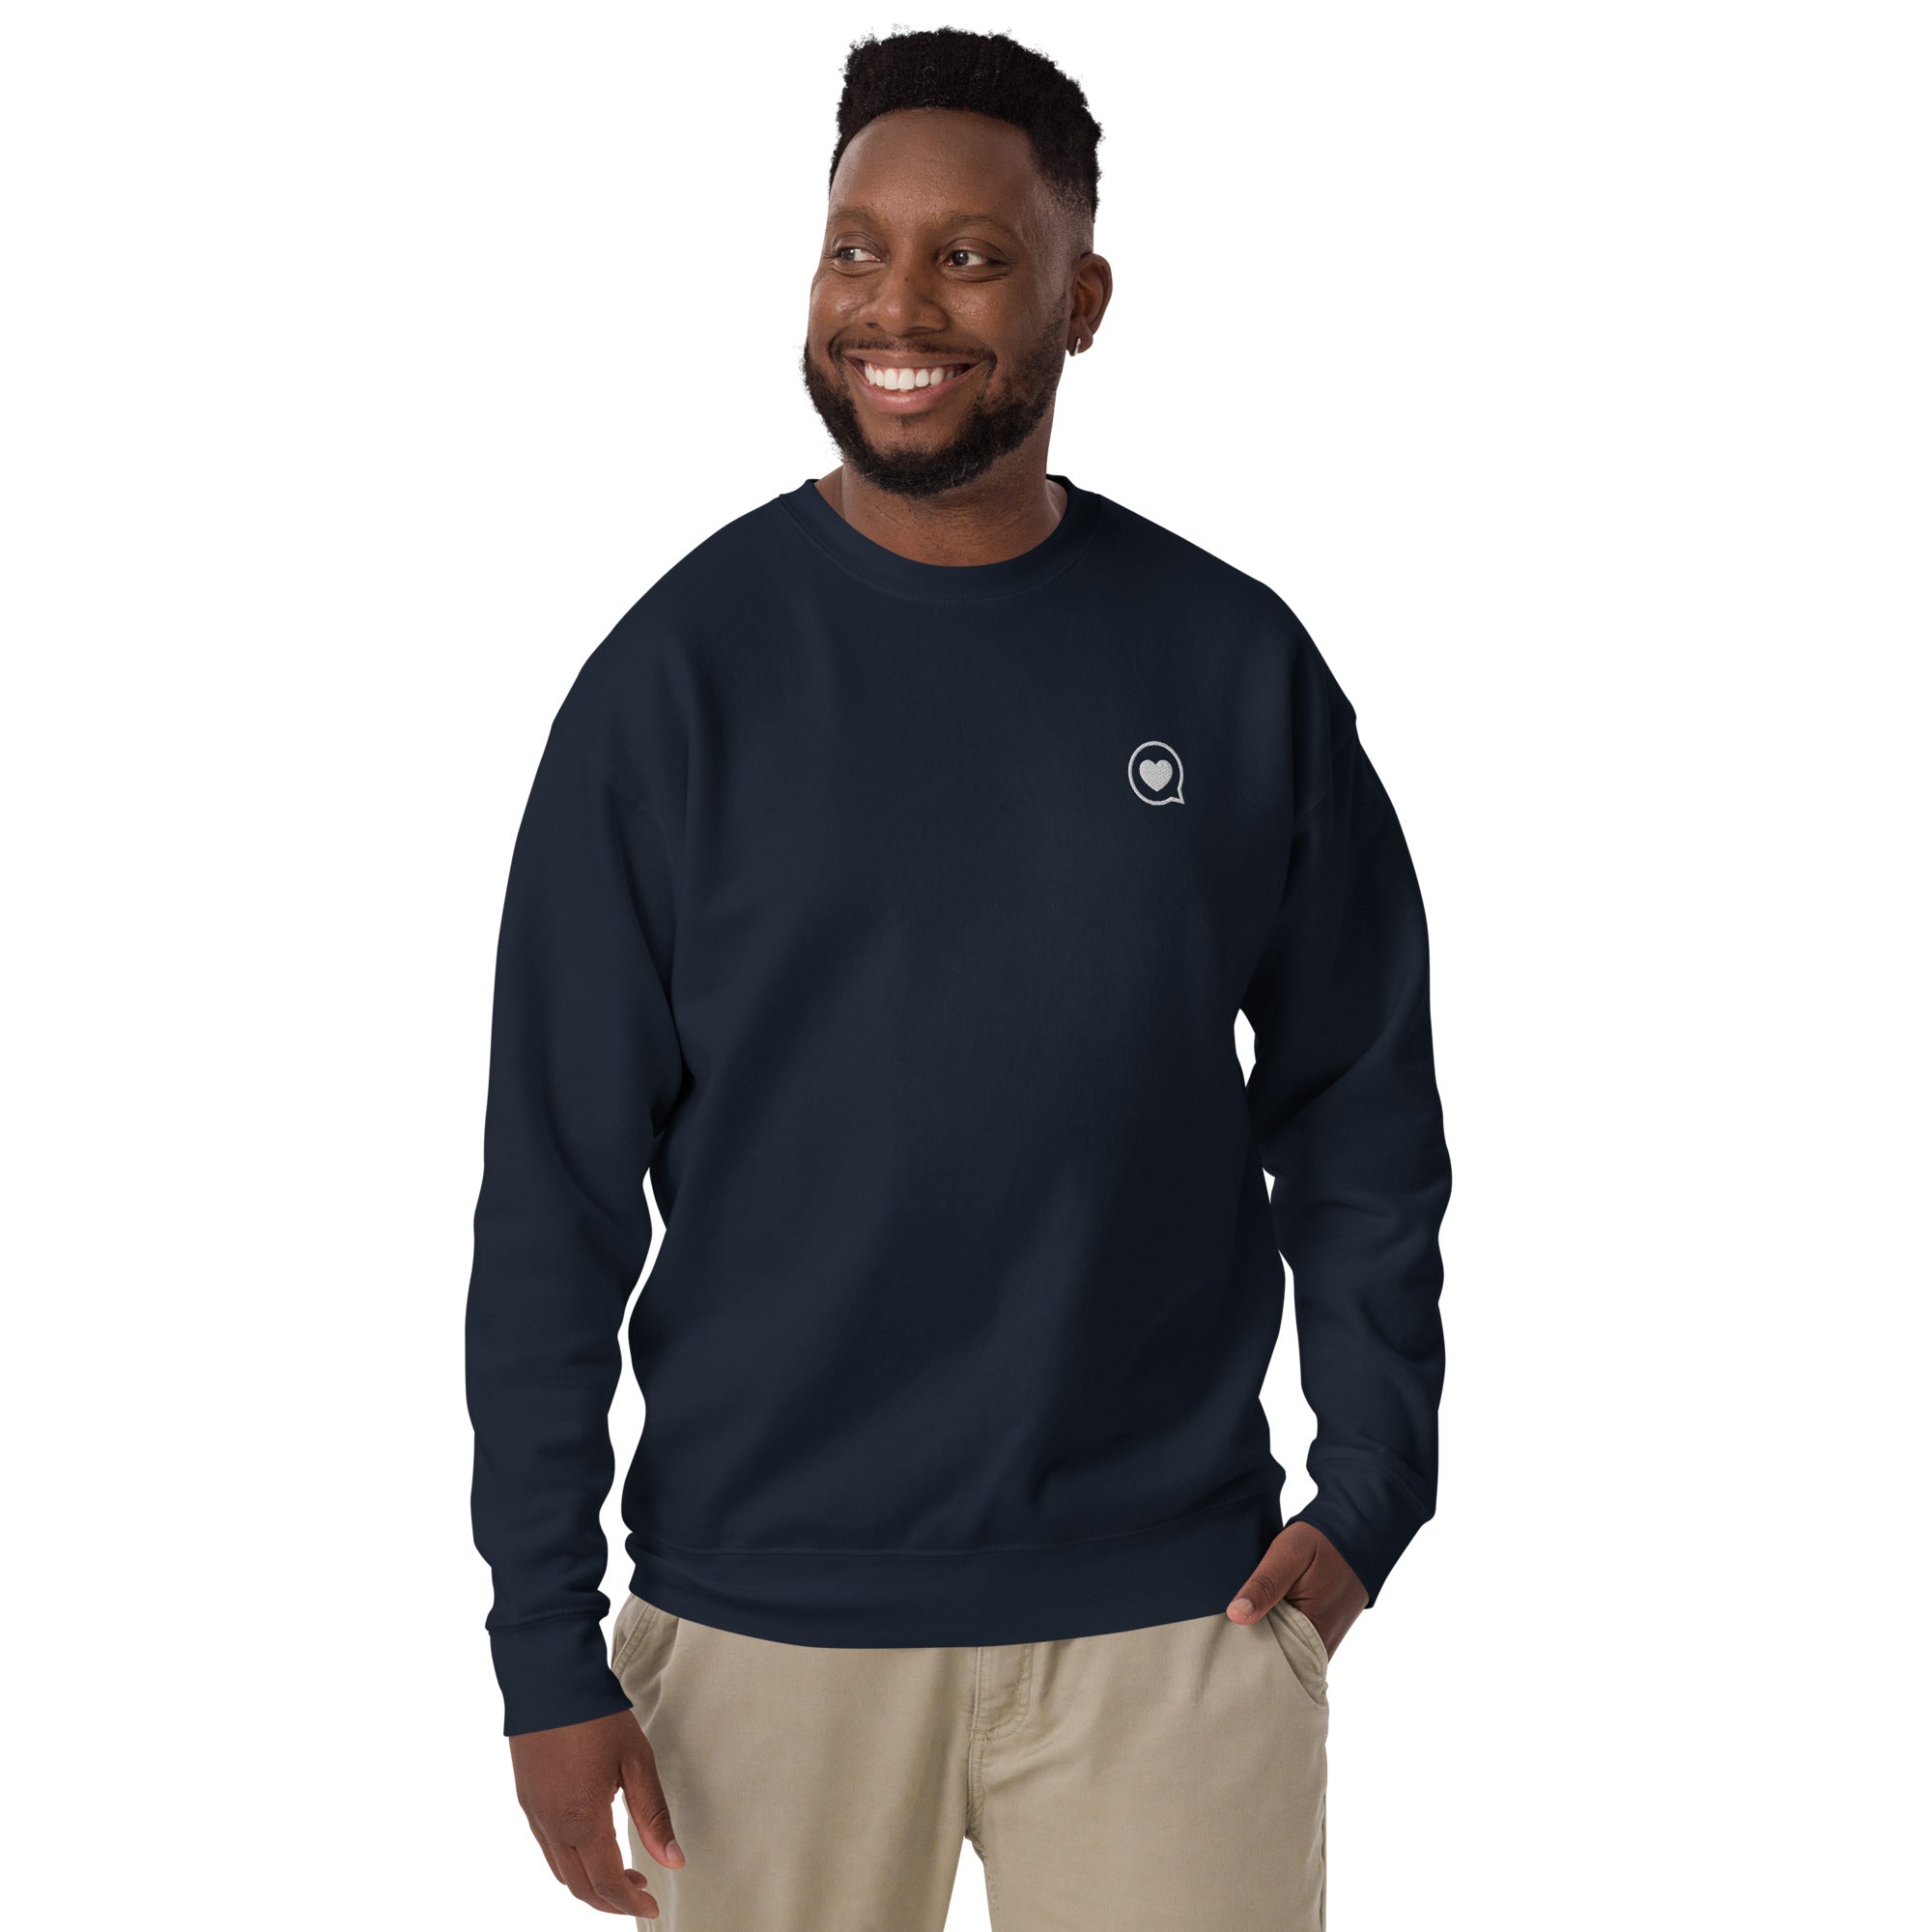 HeartLife Logo Unisex Premium Sweatshirt